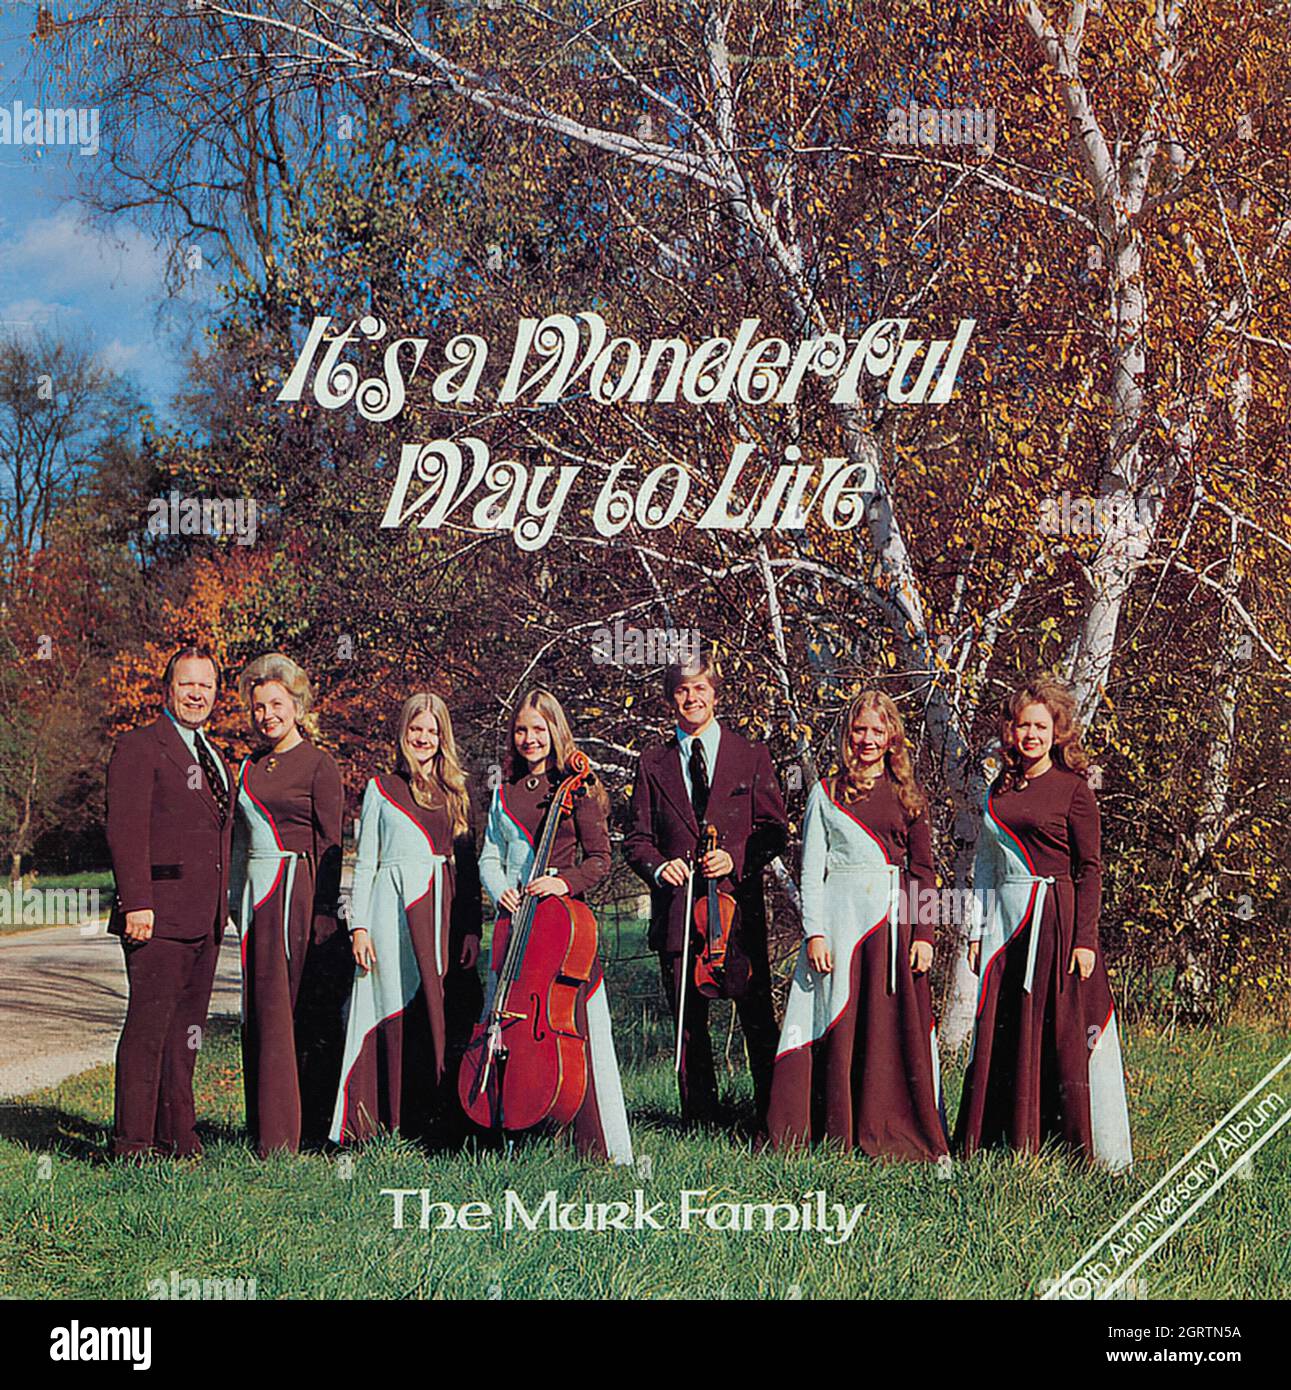 The Murk Family - IT's A Wonderful Way to Live - Vintage American Christian Vinyl Album Stockfoto